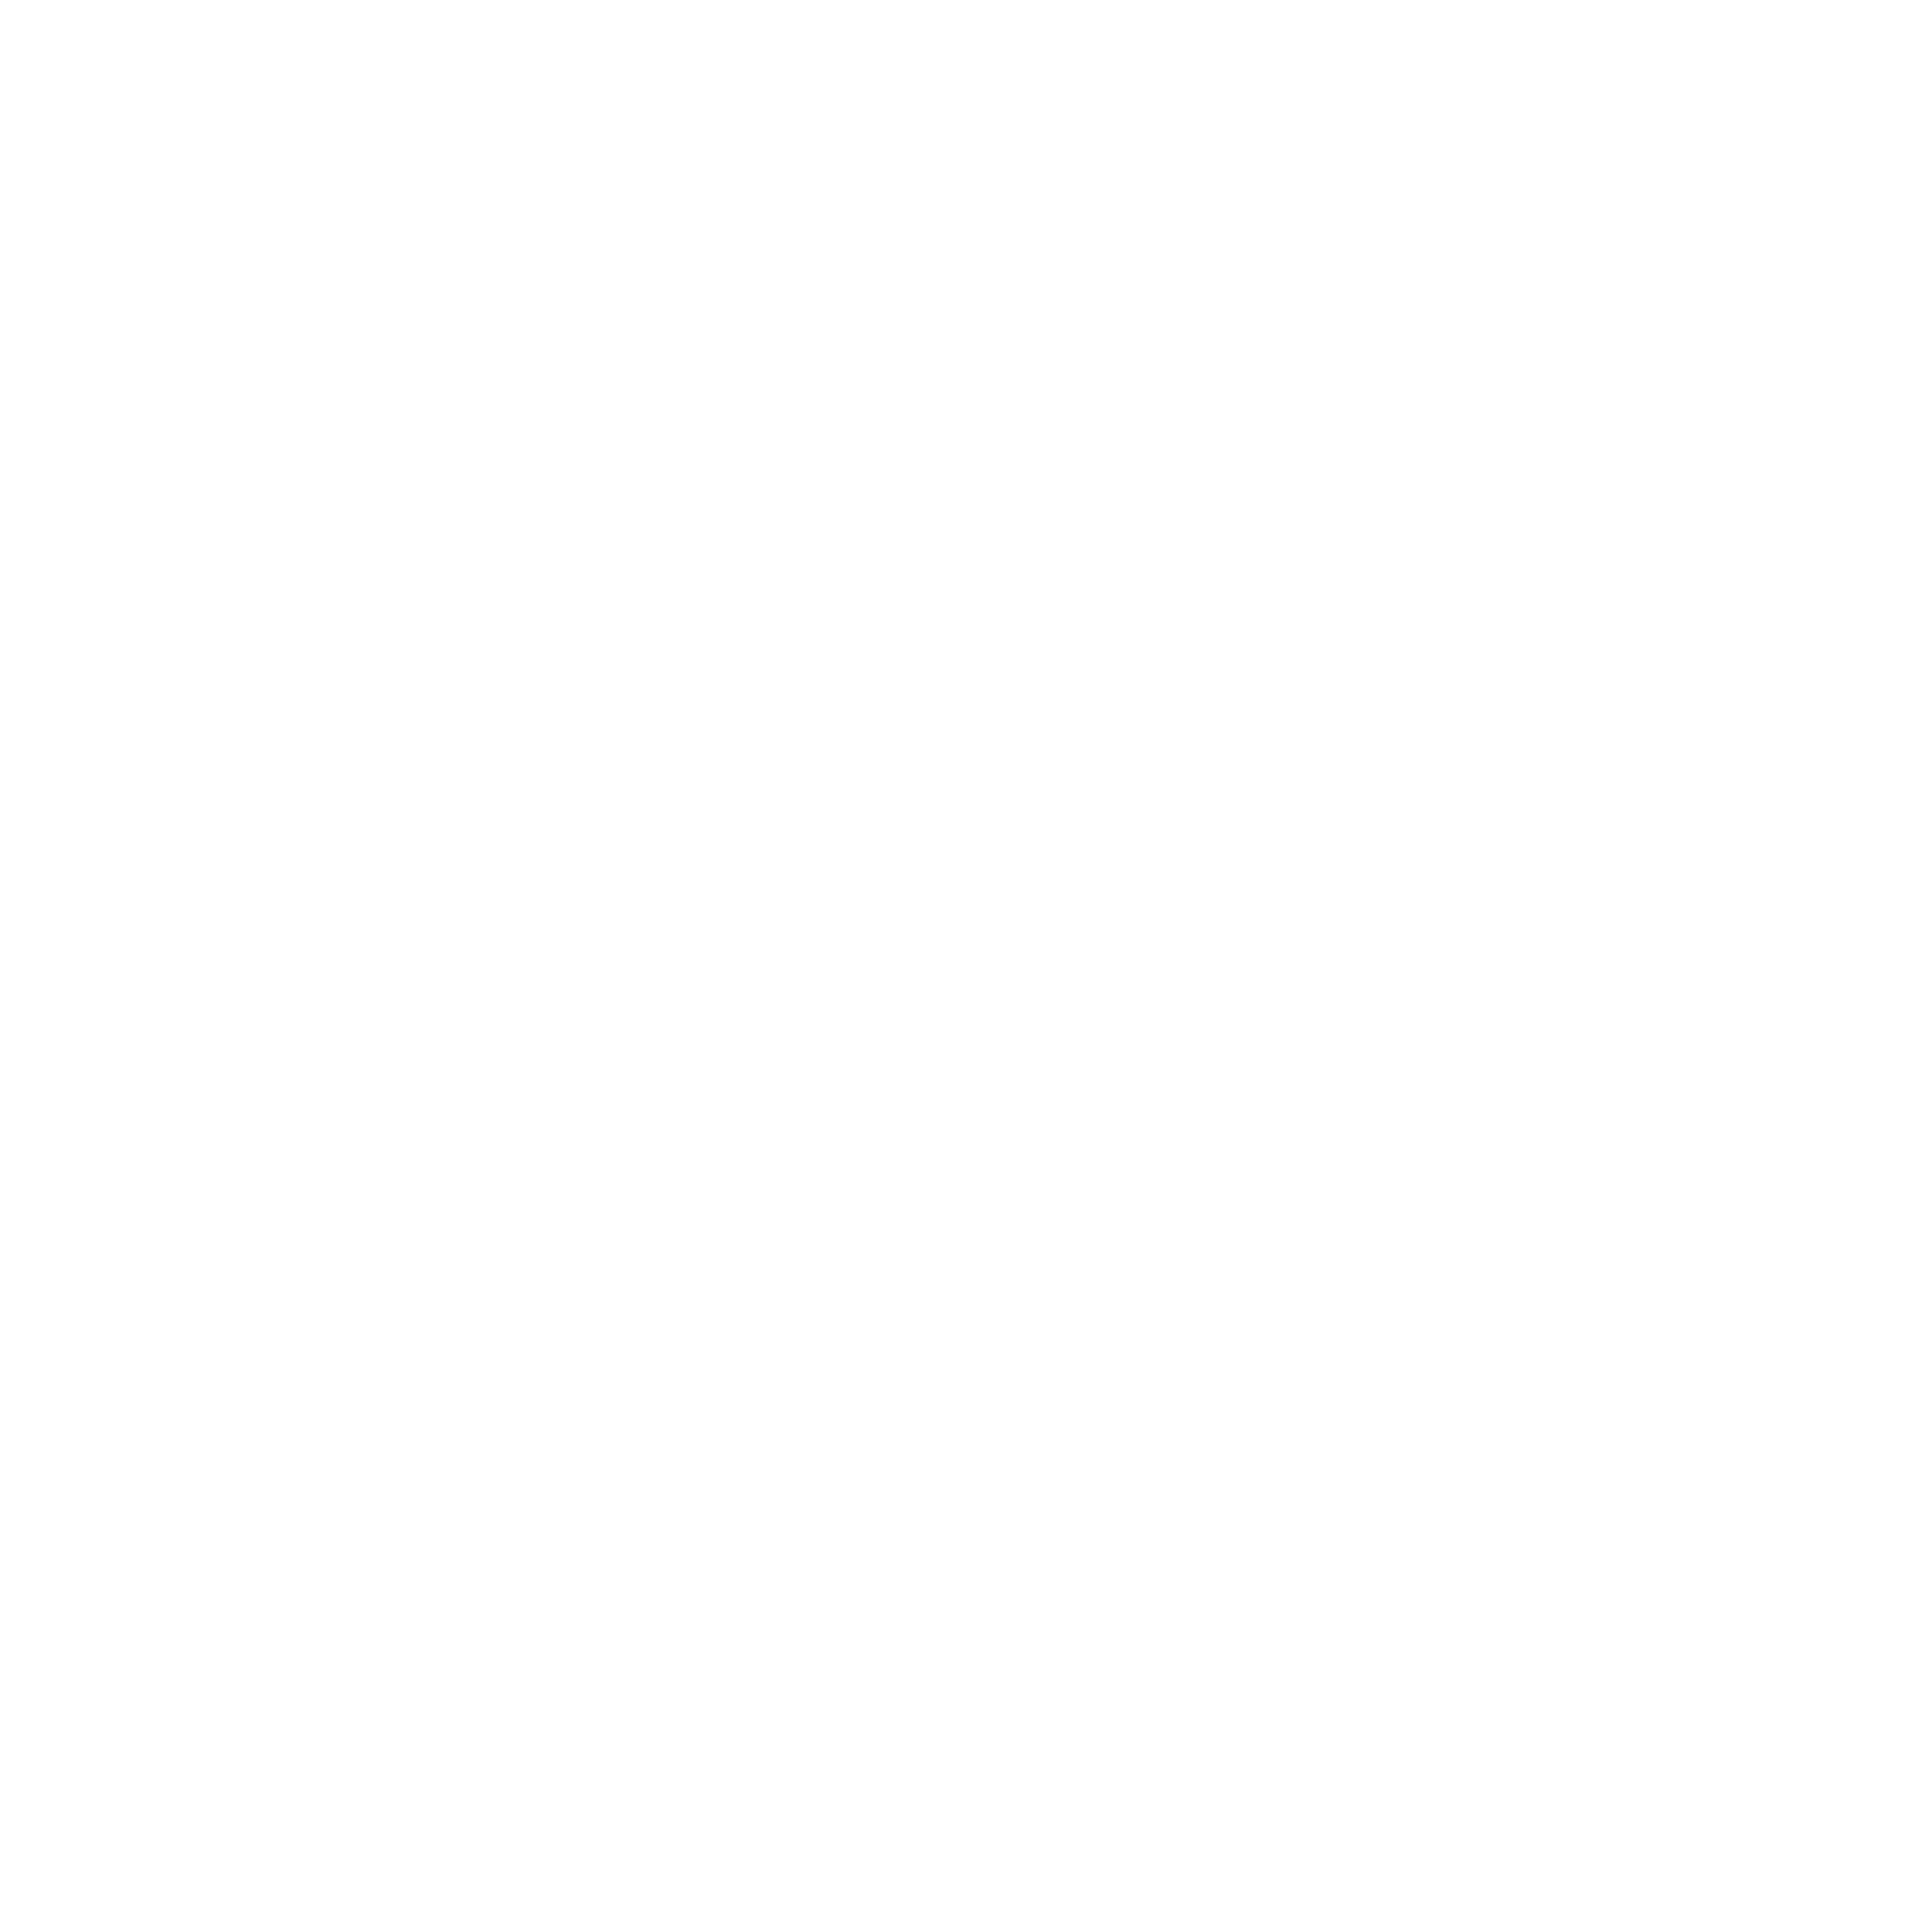 Marubeni Logo - Marubeni Logo PNG Transparent & SVG Vector - Freebie Supply